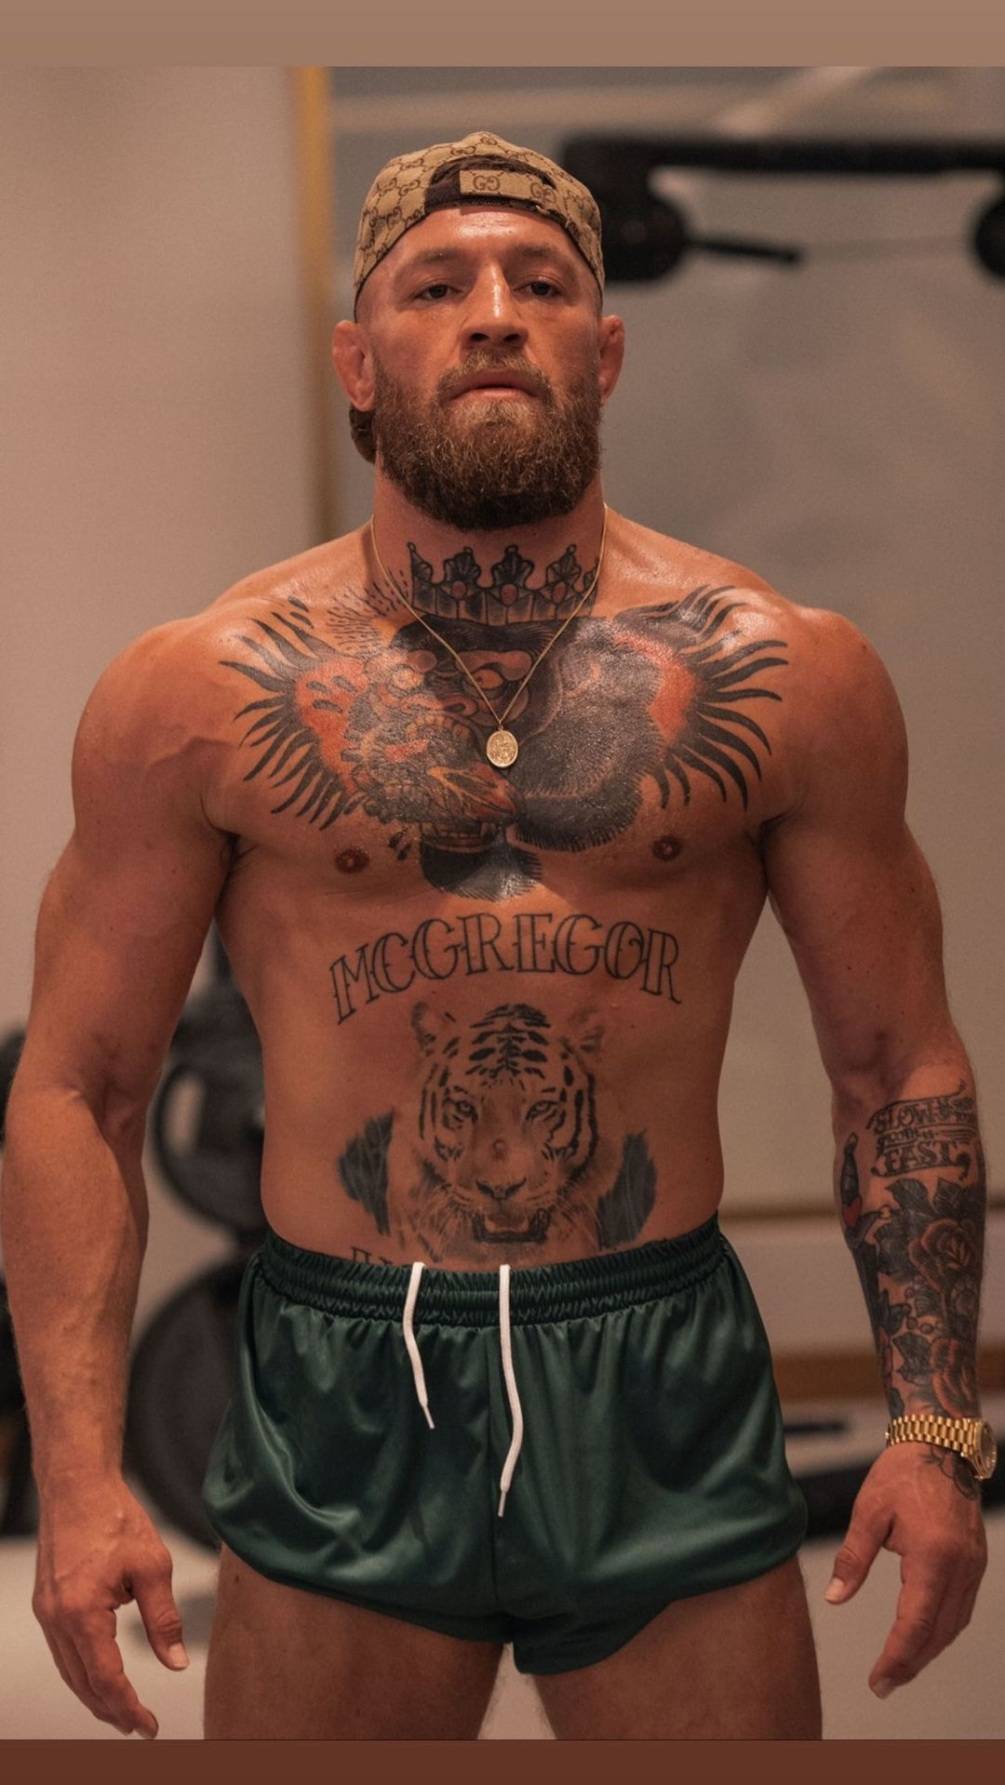 (Photos) Conor McGregor shows off his insanely muscular physique